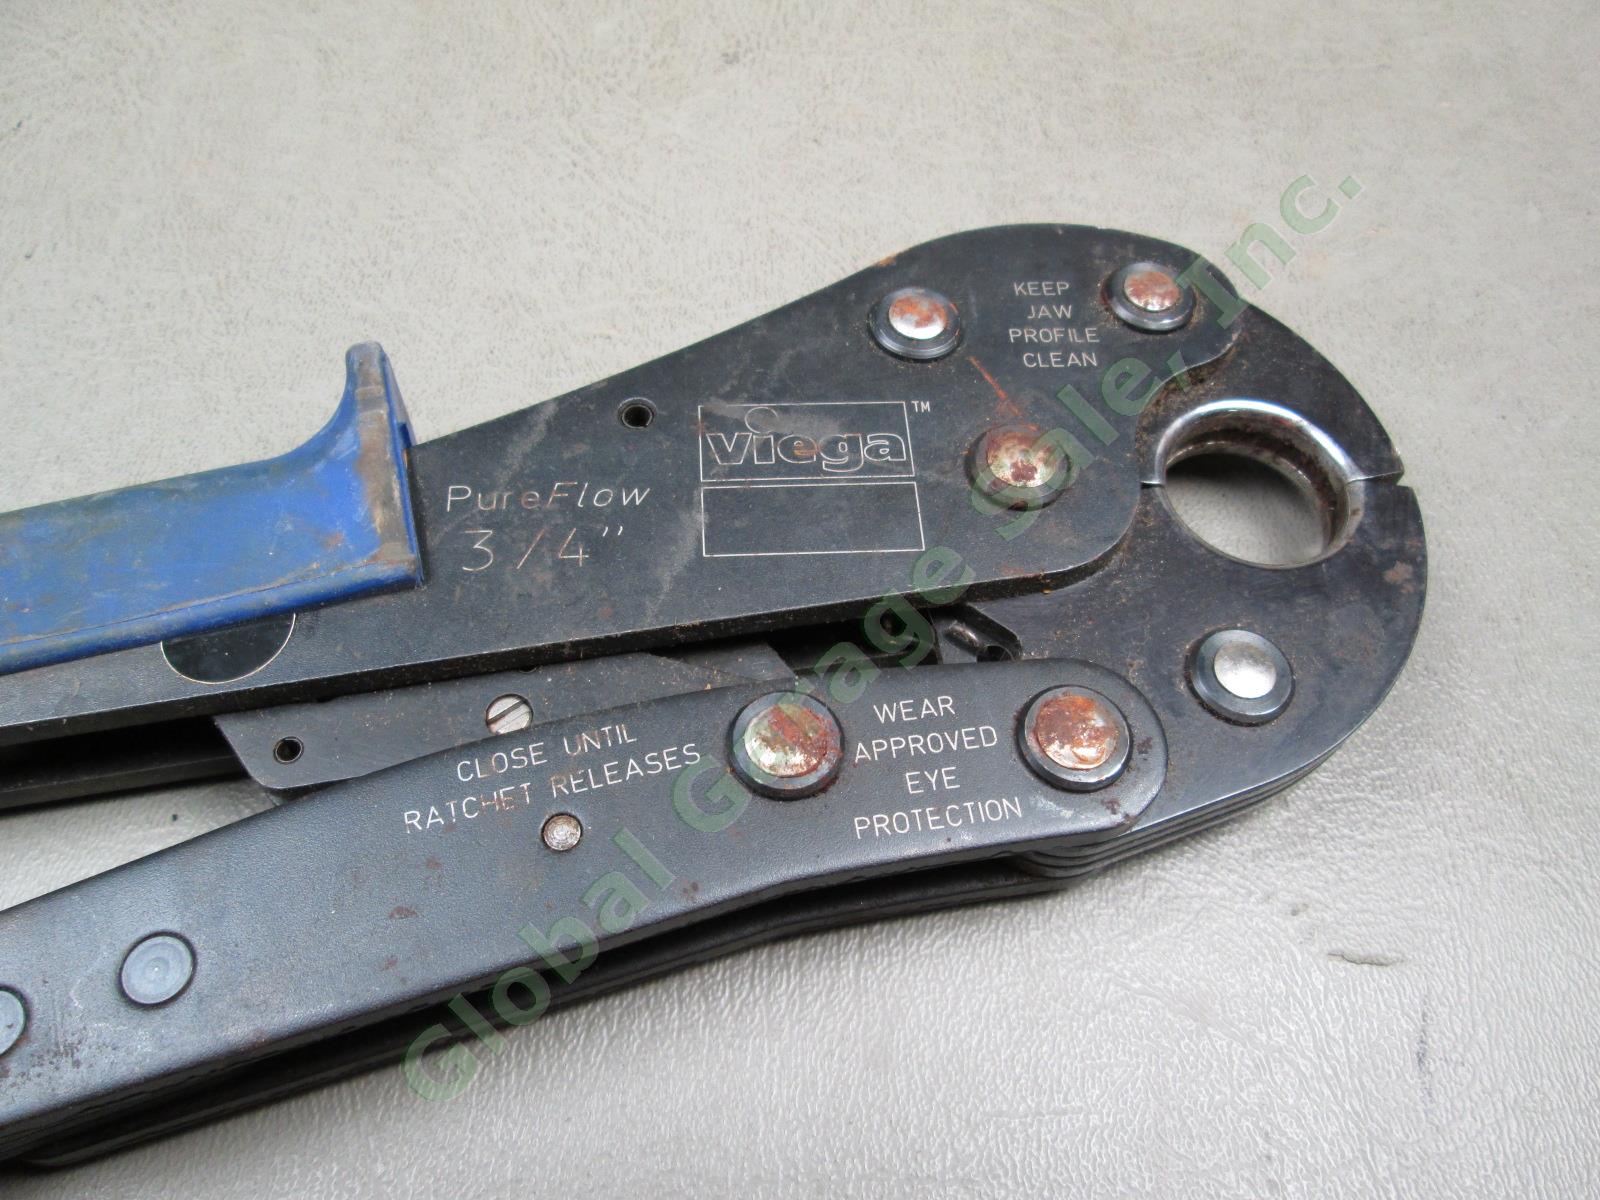 Viega PureFlow 3/4" PEX Press Tool Ratcheting Plumbing Crimper Blue Handle 50040 5